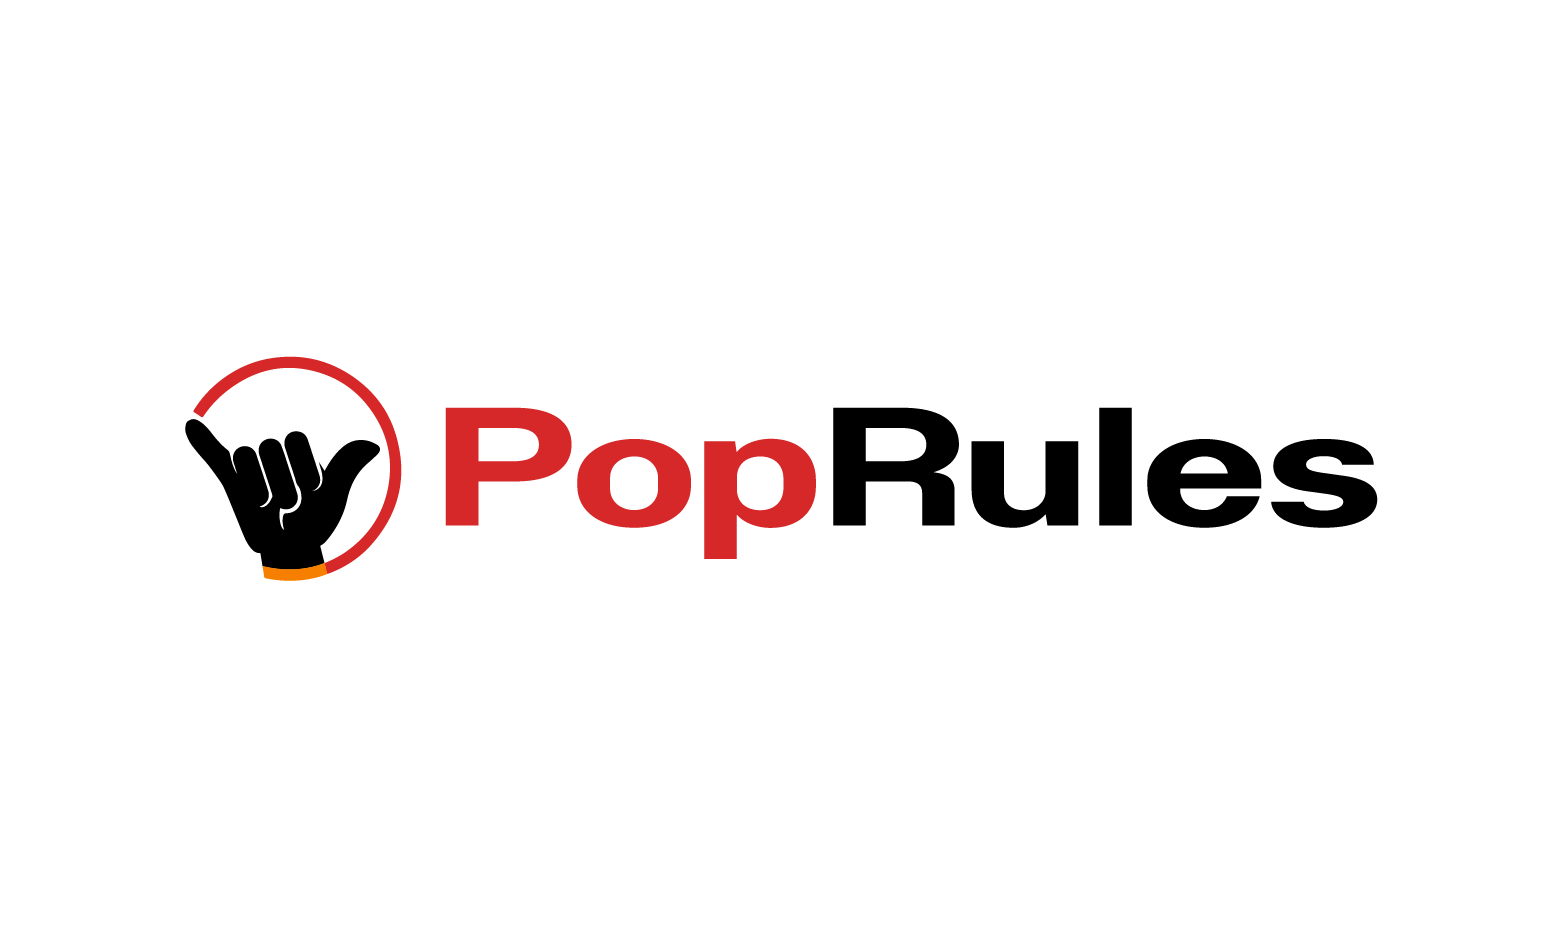 PopRules.com - Creative brandable domain for sale